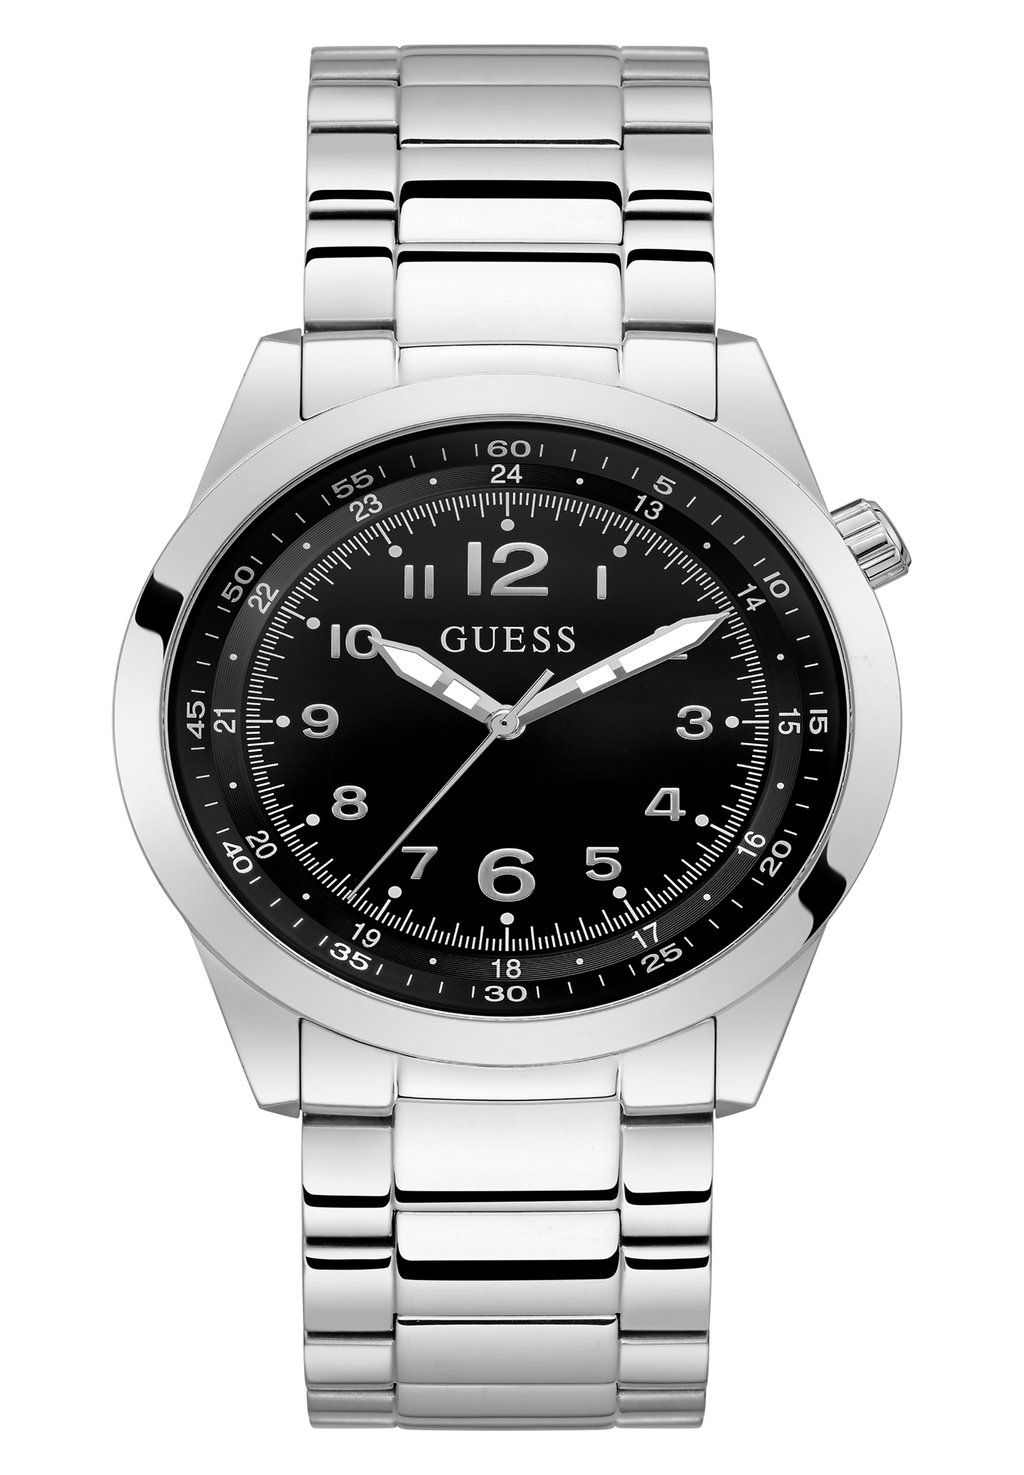 Часы Max Guess, цвет silver-coloured часы prodigy exclusive guess цвет silver coloured black